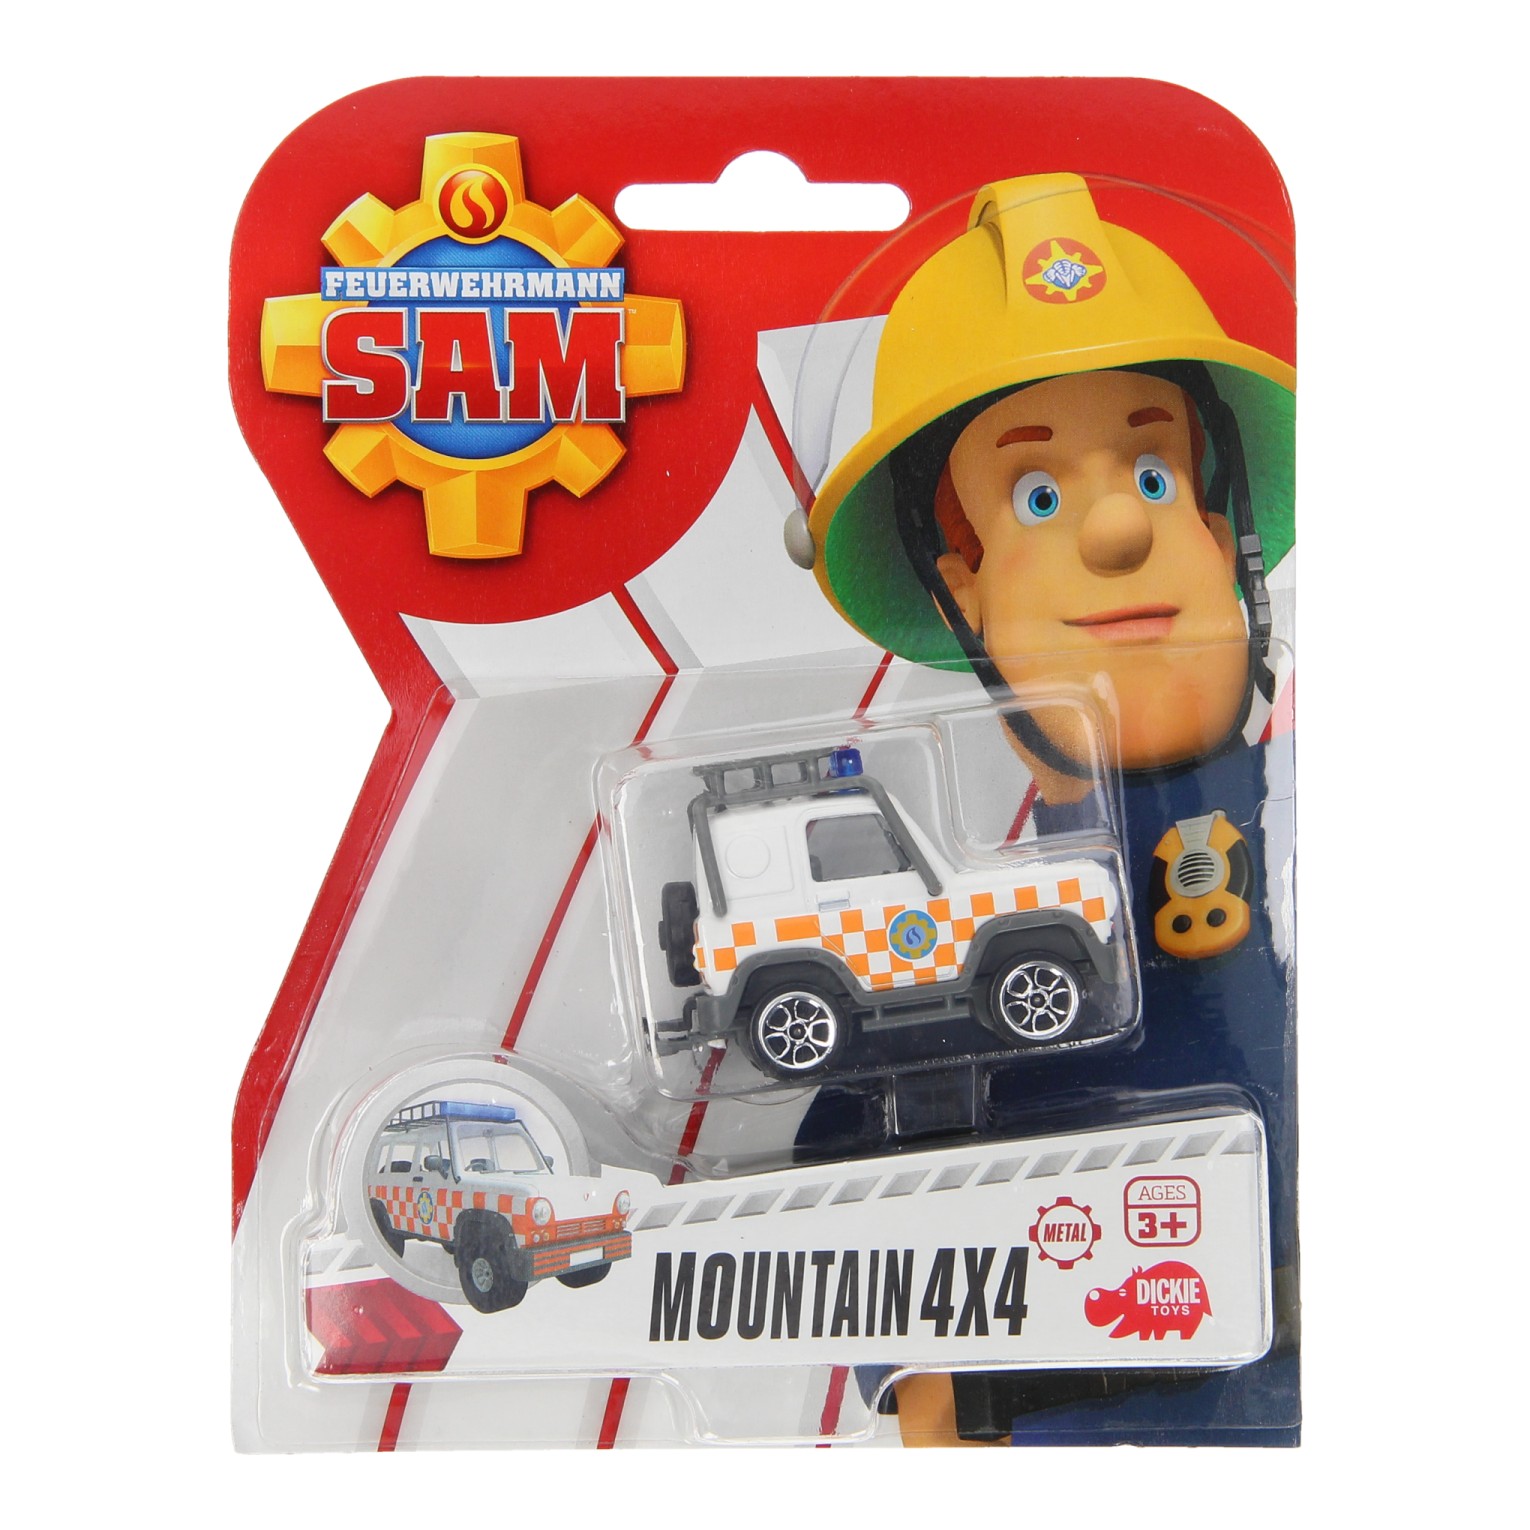 Brandweerman Sam Speelfiguur - Mountain 4x4